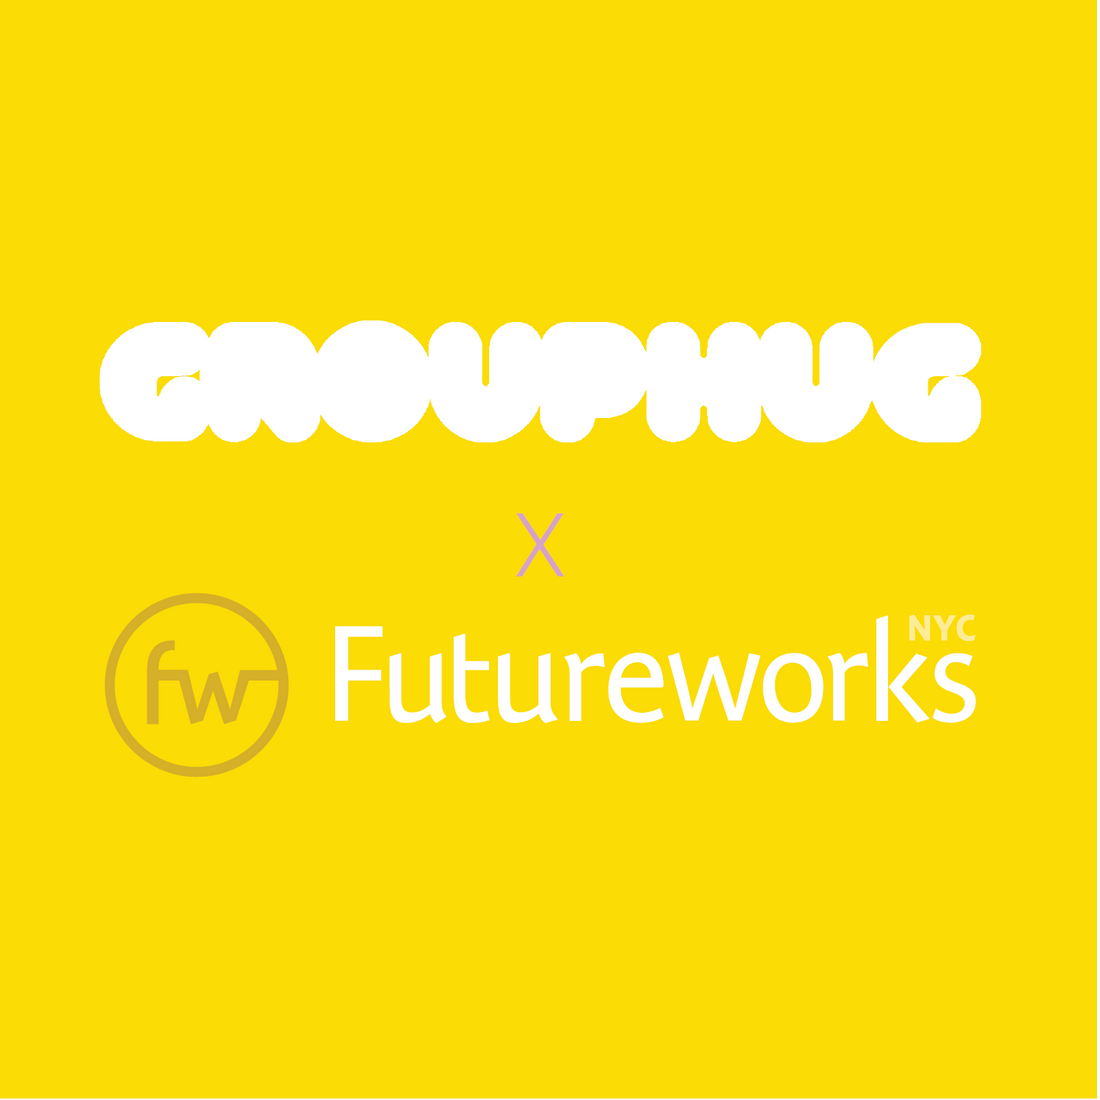 We're in the 2019 Futureworks Hardware Incubator!